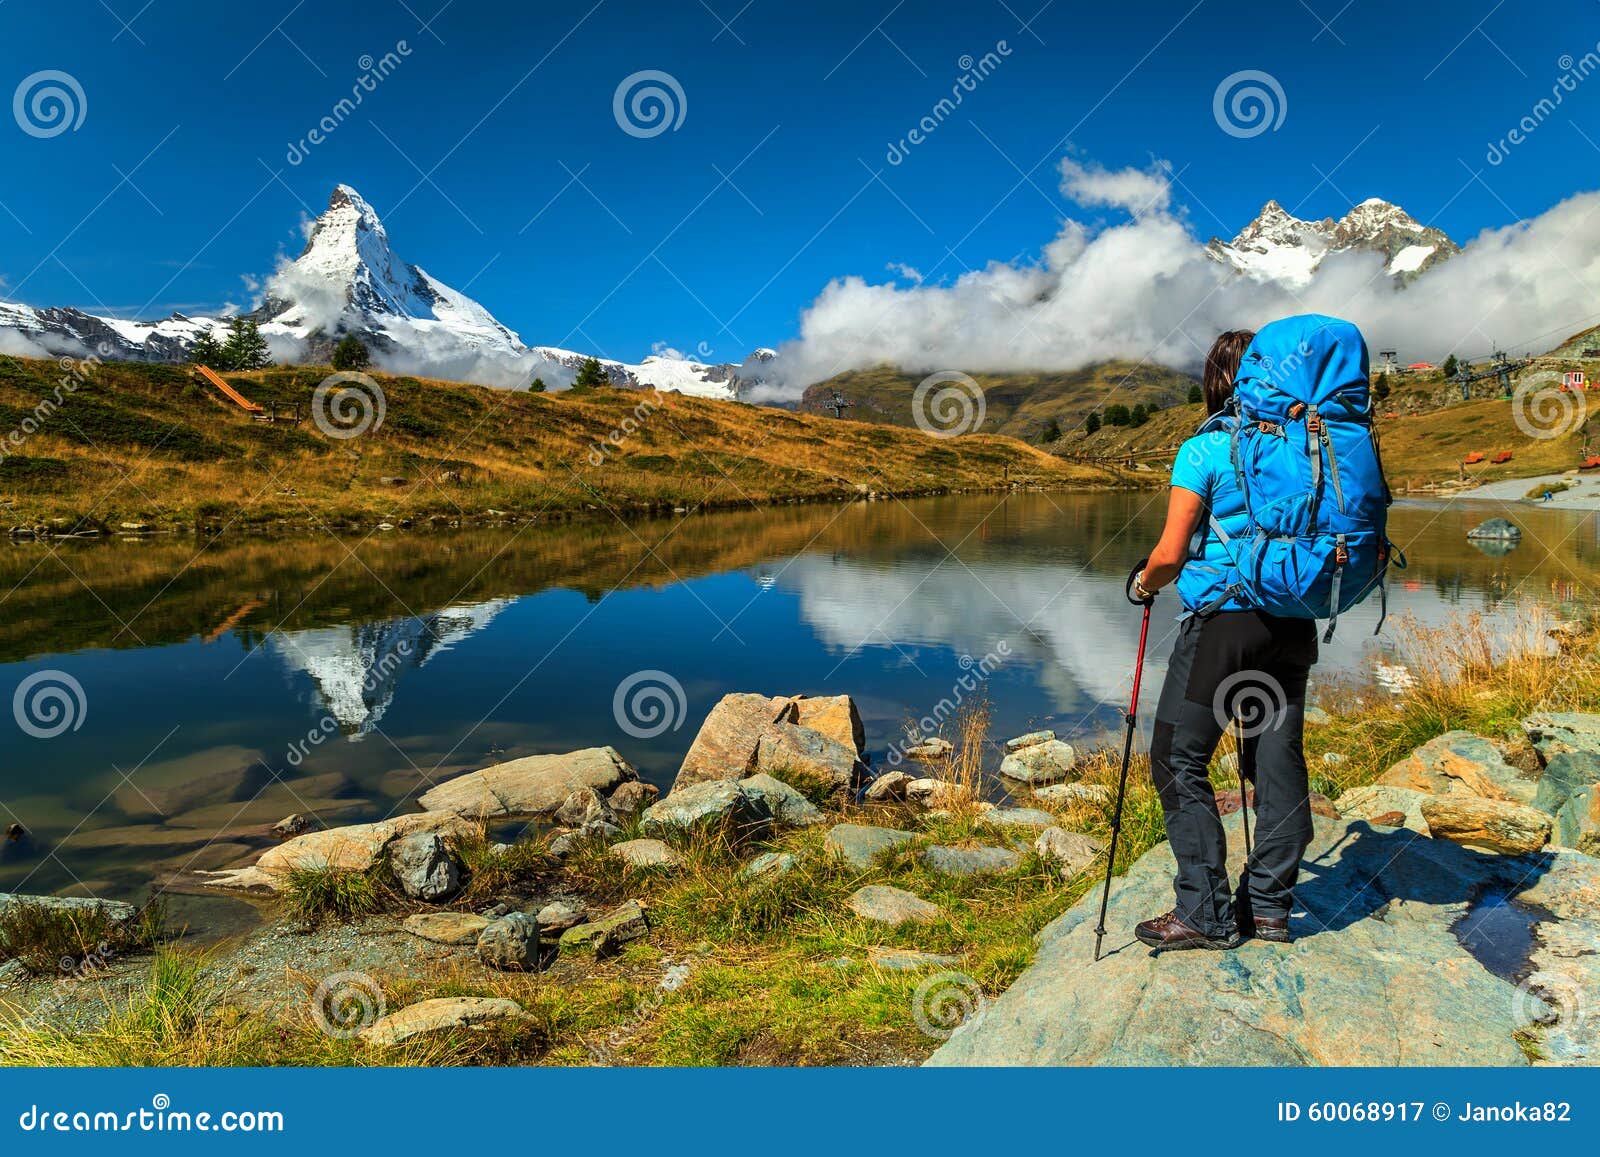 famous matterhorn peak and leisee alpine glacier lake,valais,switzerland